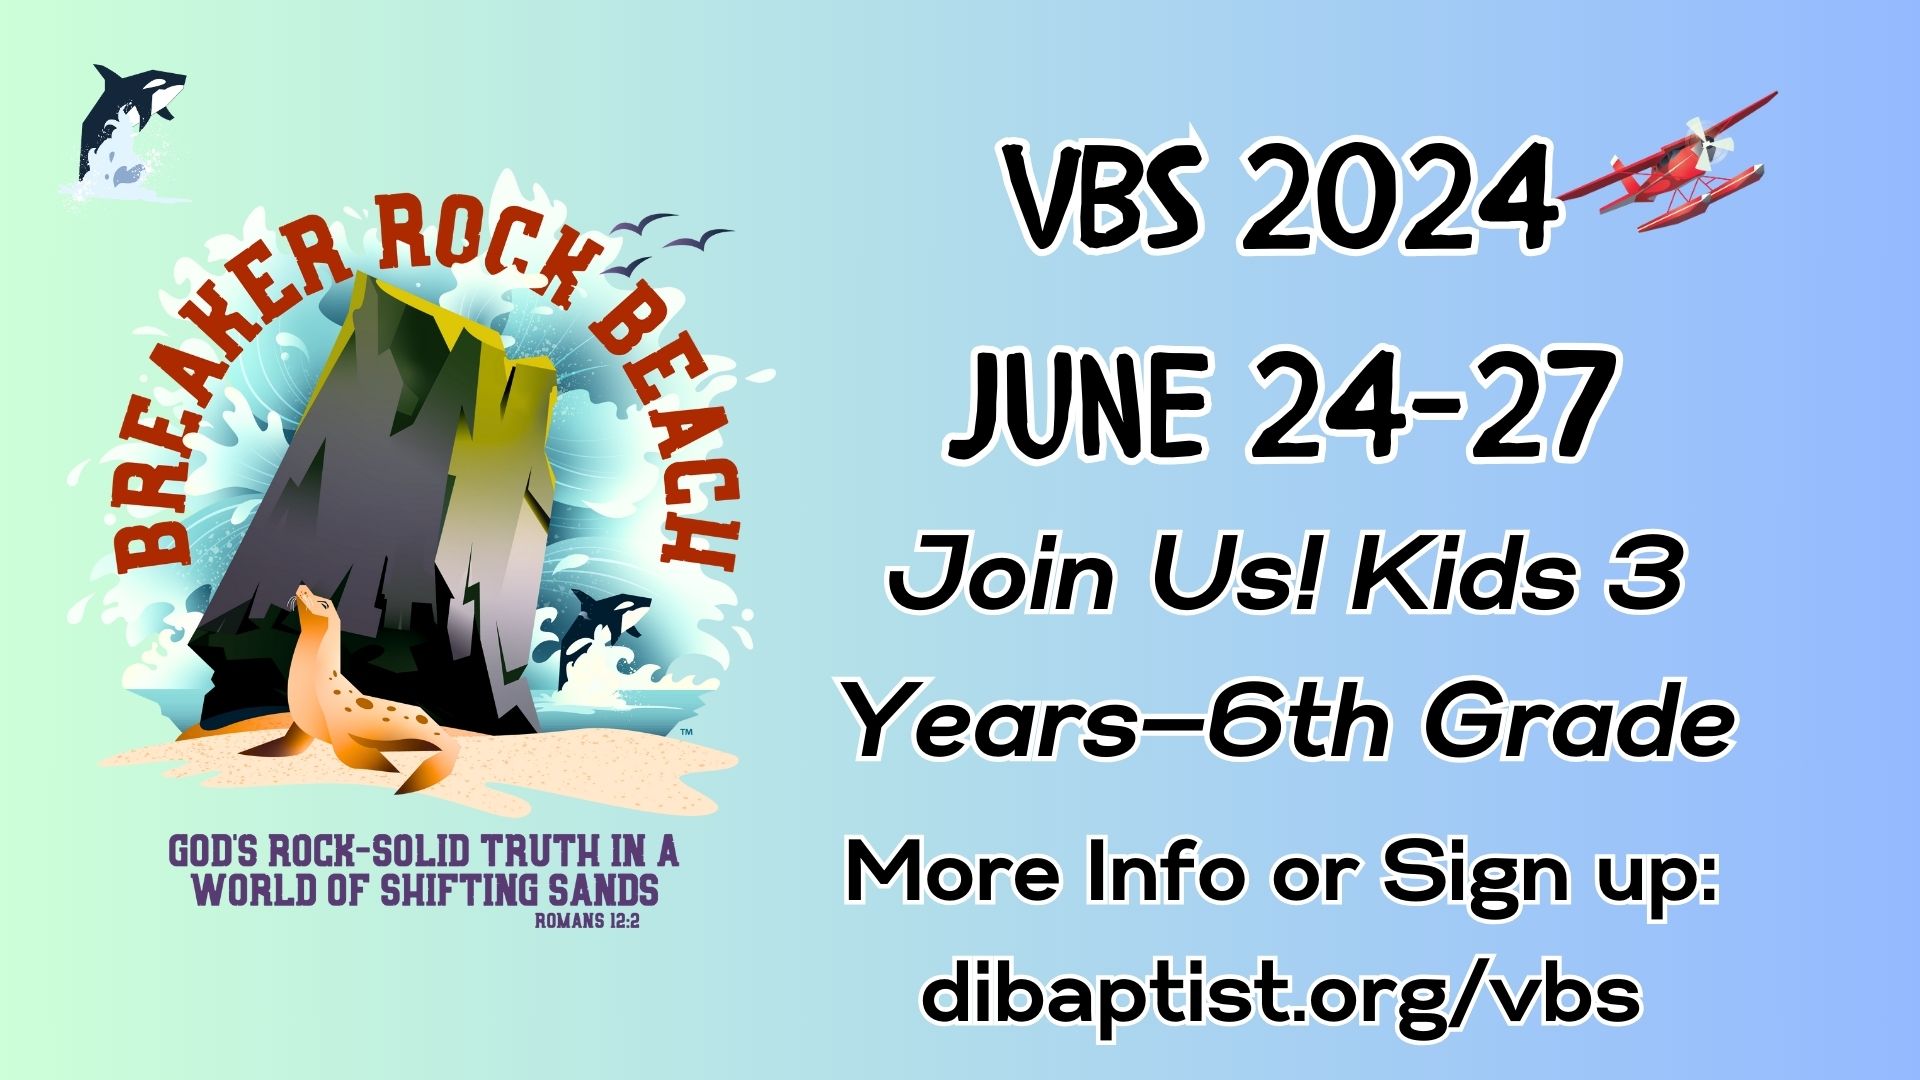 VBS 2024 - June 24-27